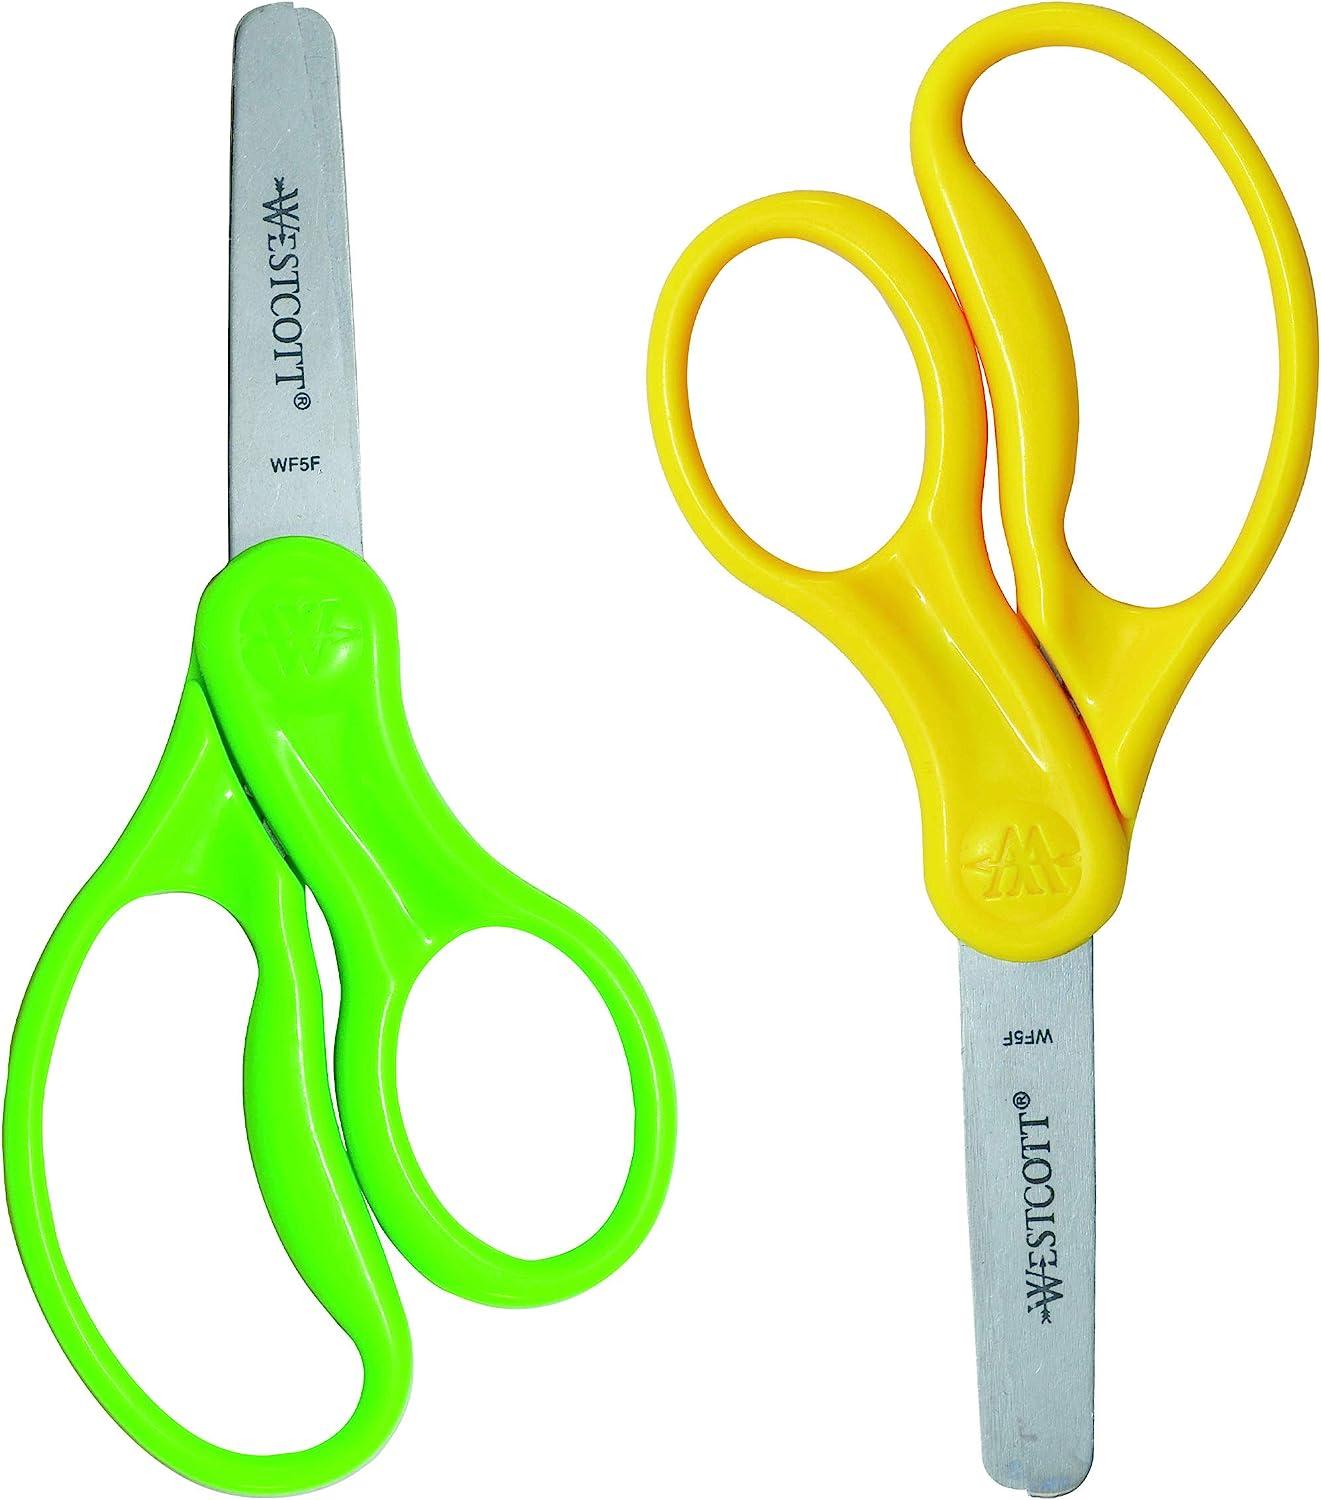 Westcott 5 Hard Handle Kids Scissors, Pointed - 2 count